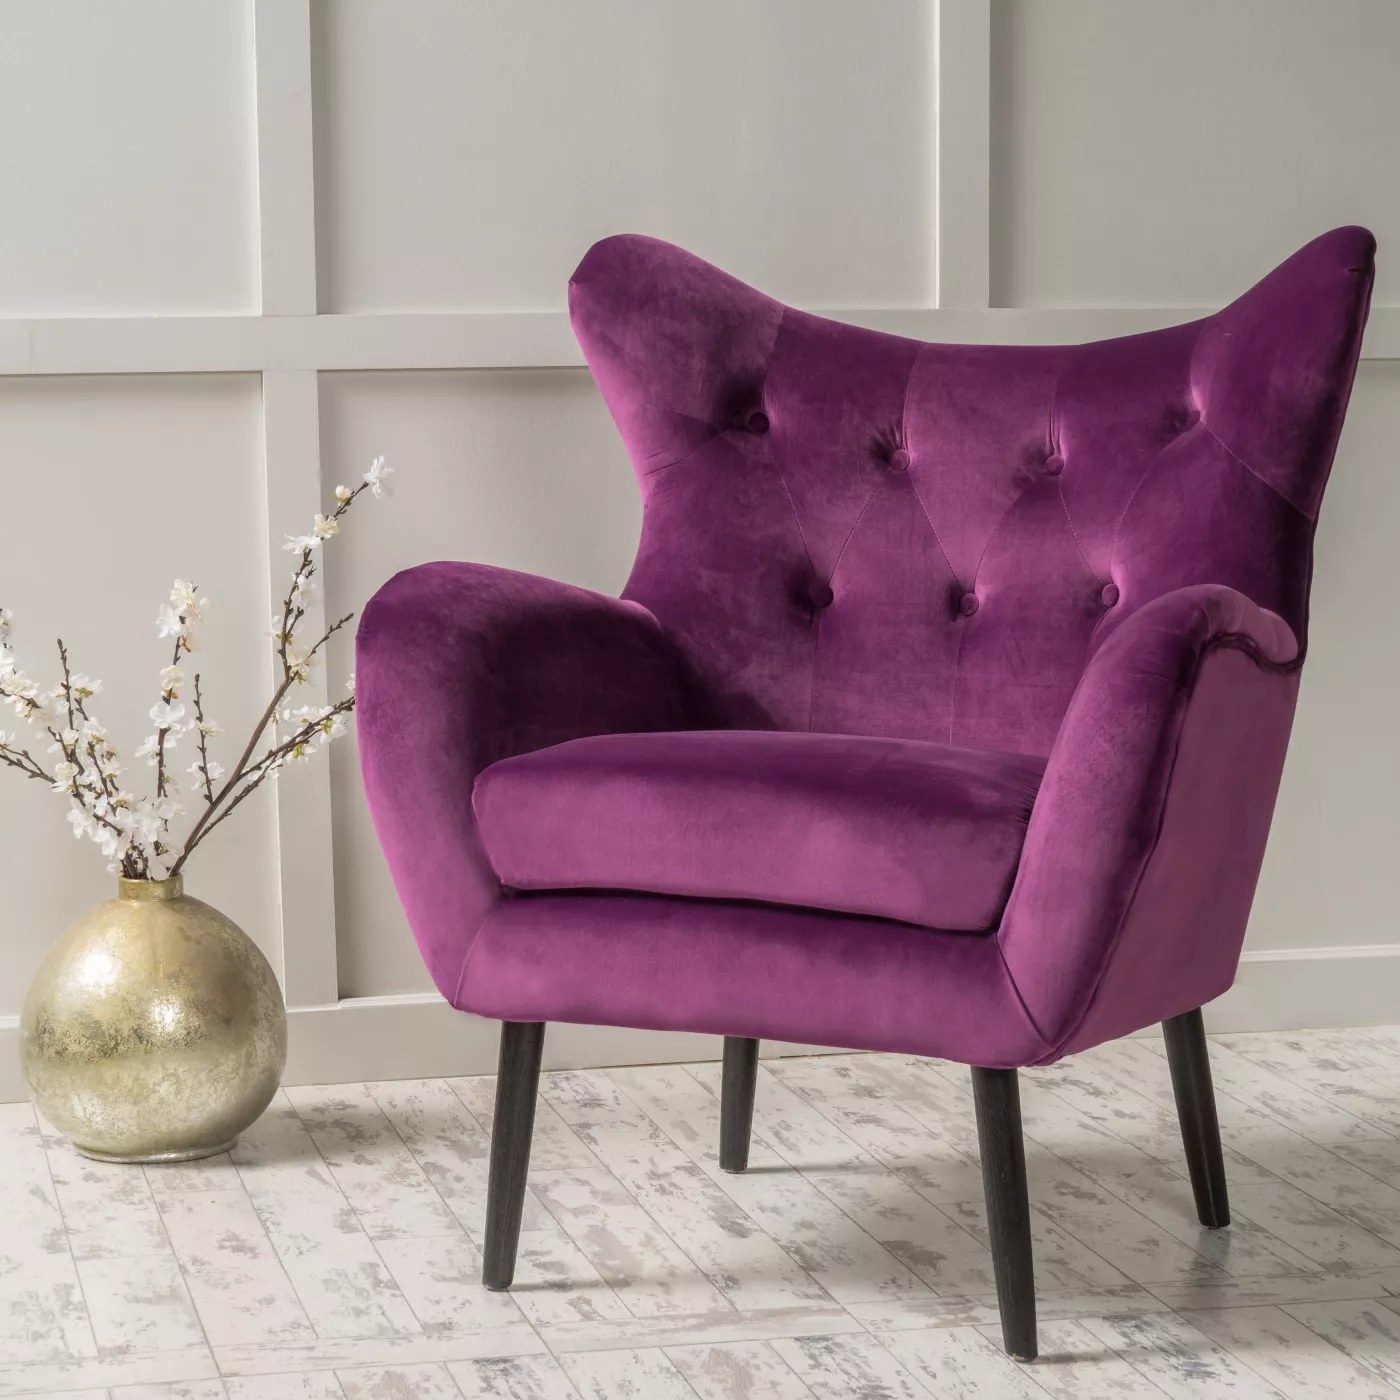 A purple, velvet armchair